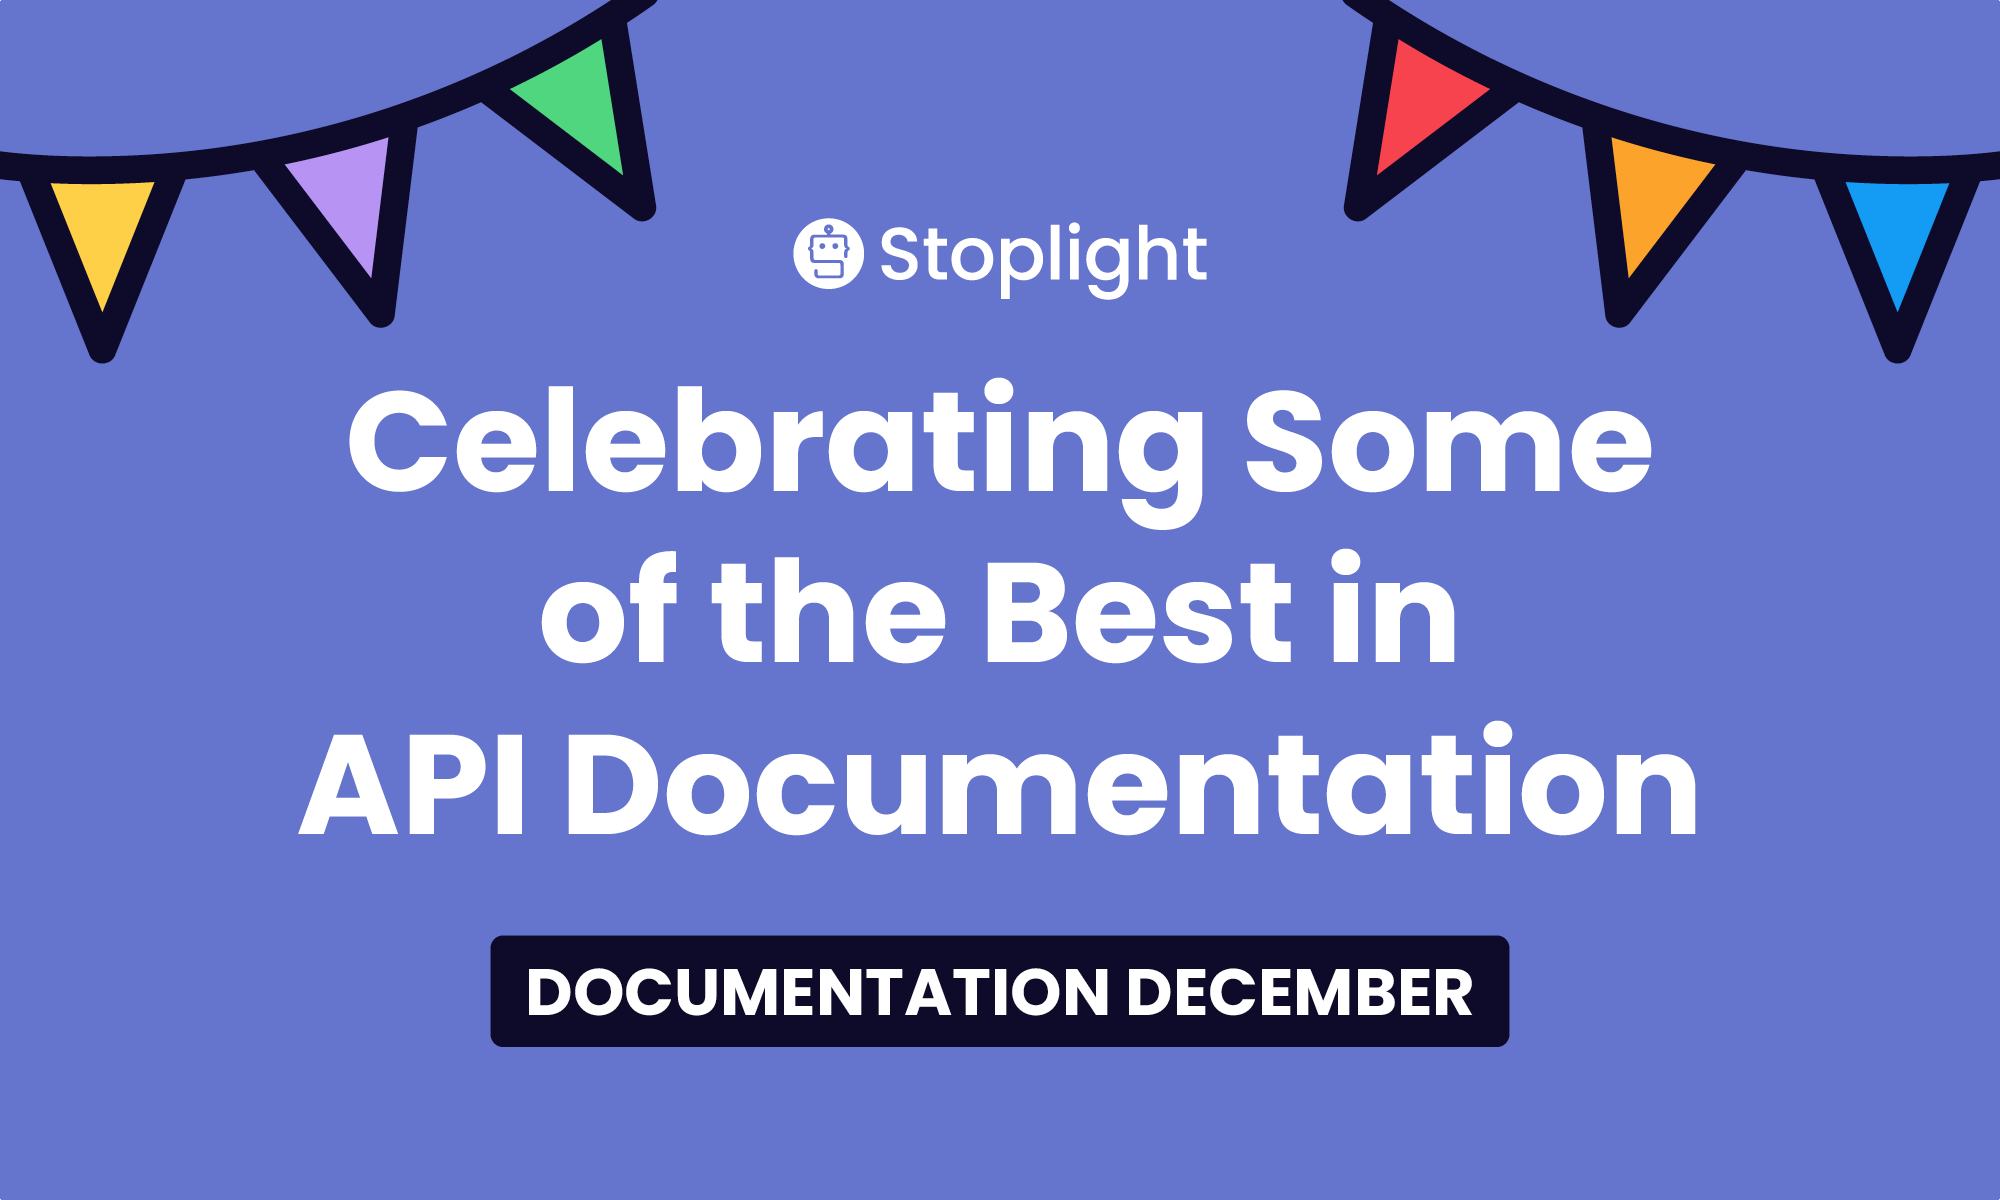 Documentation December: Celebrating Some of the Best in API Documentation